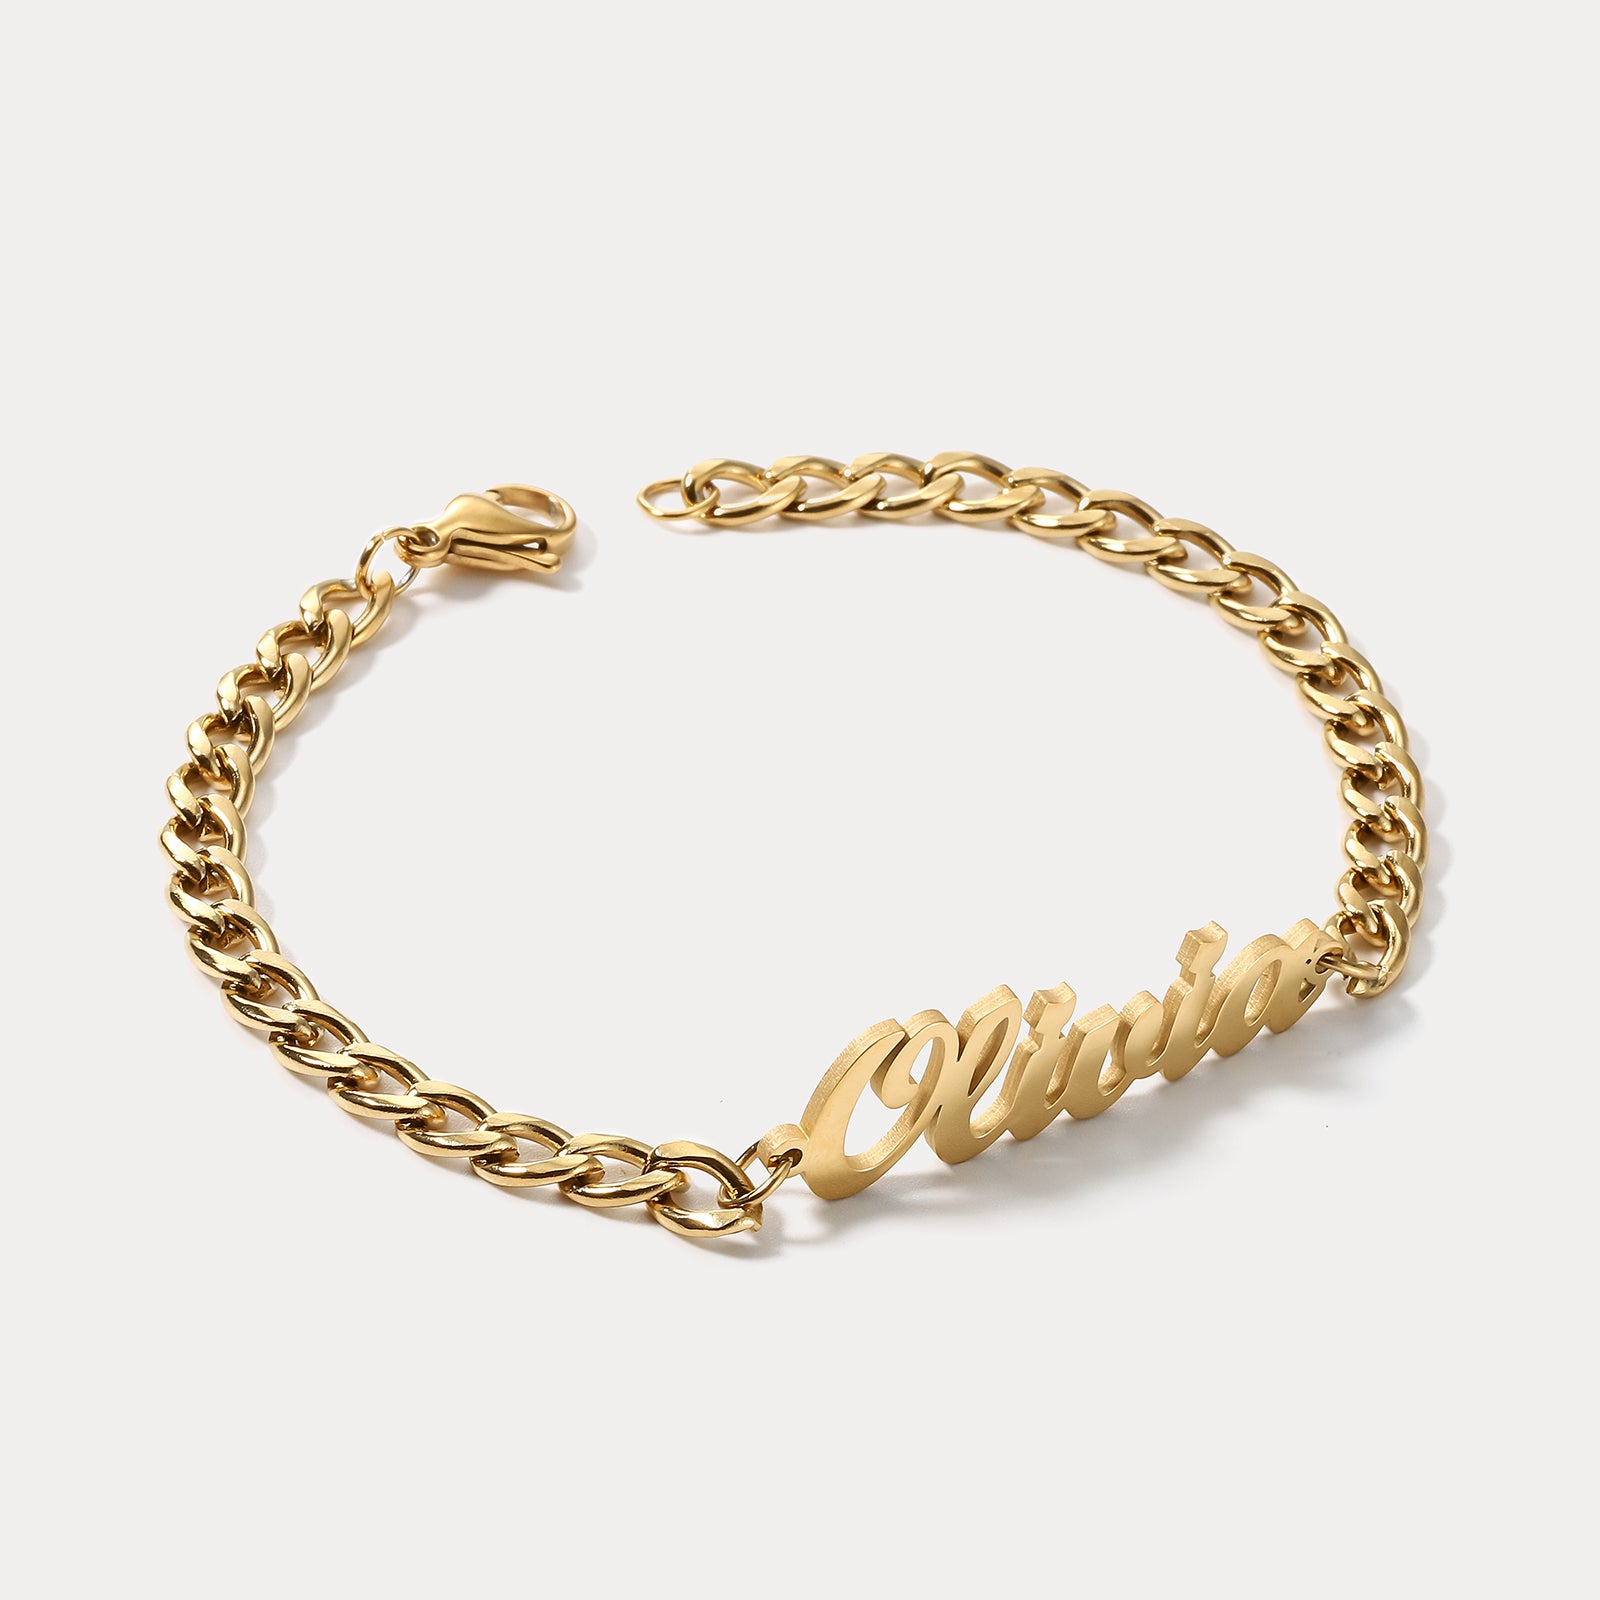 Customized Name Chain Bracelet